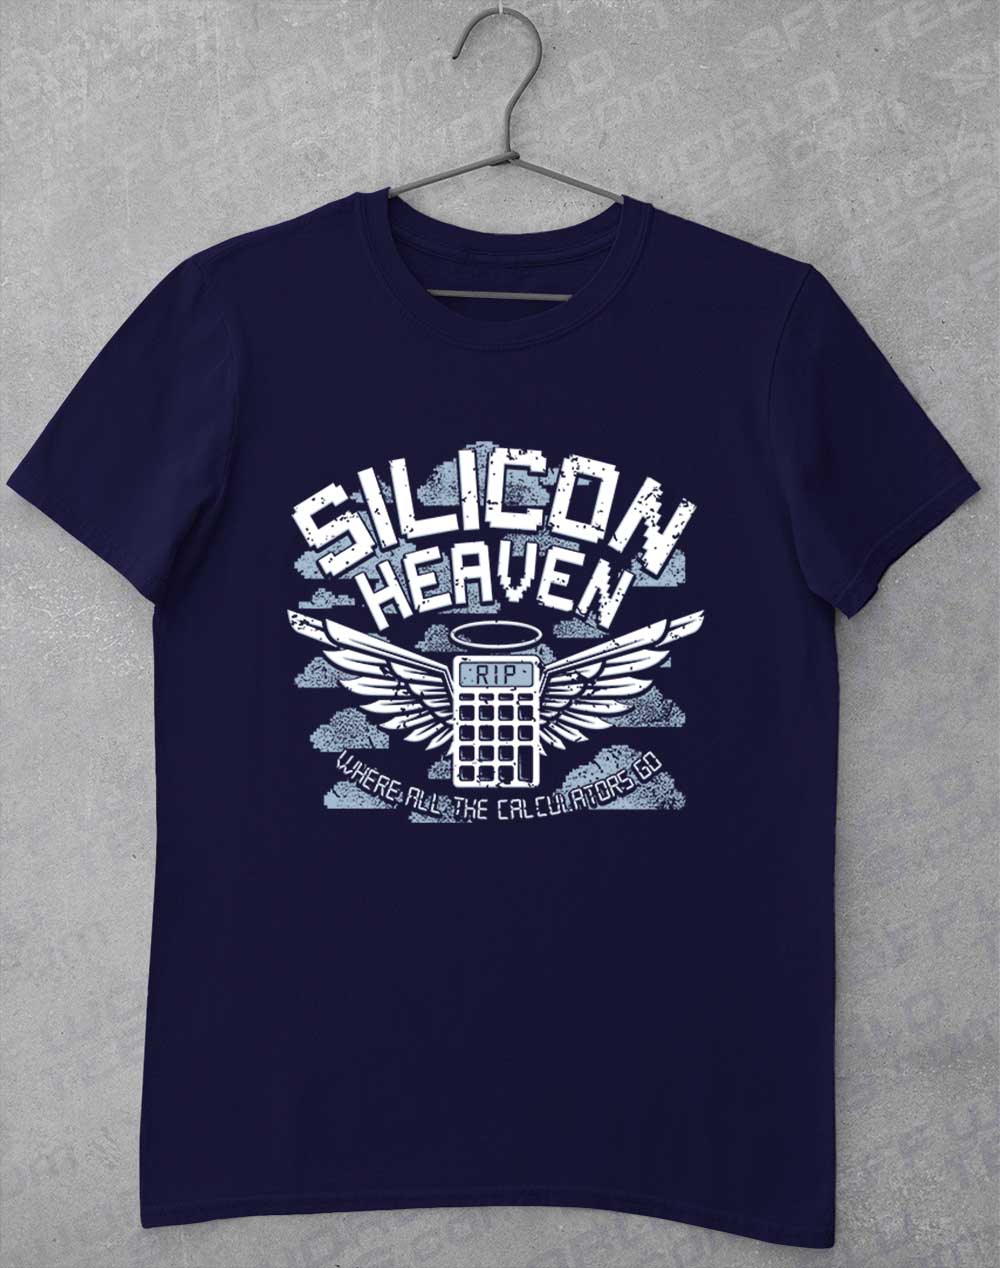 Navy - Silicon Heaven T-Shirt